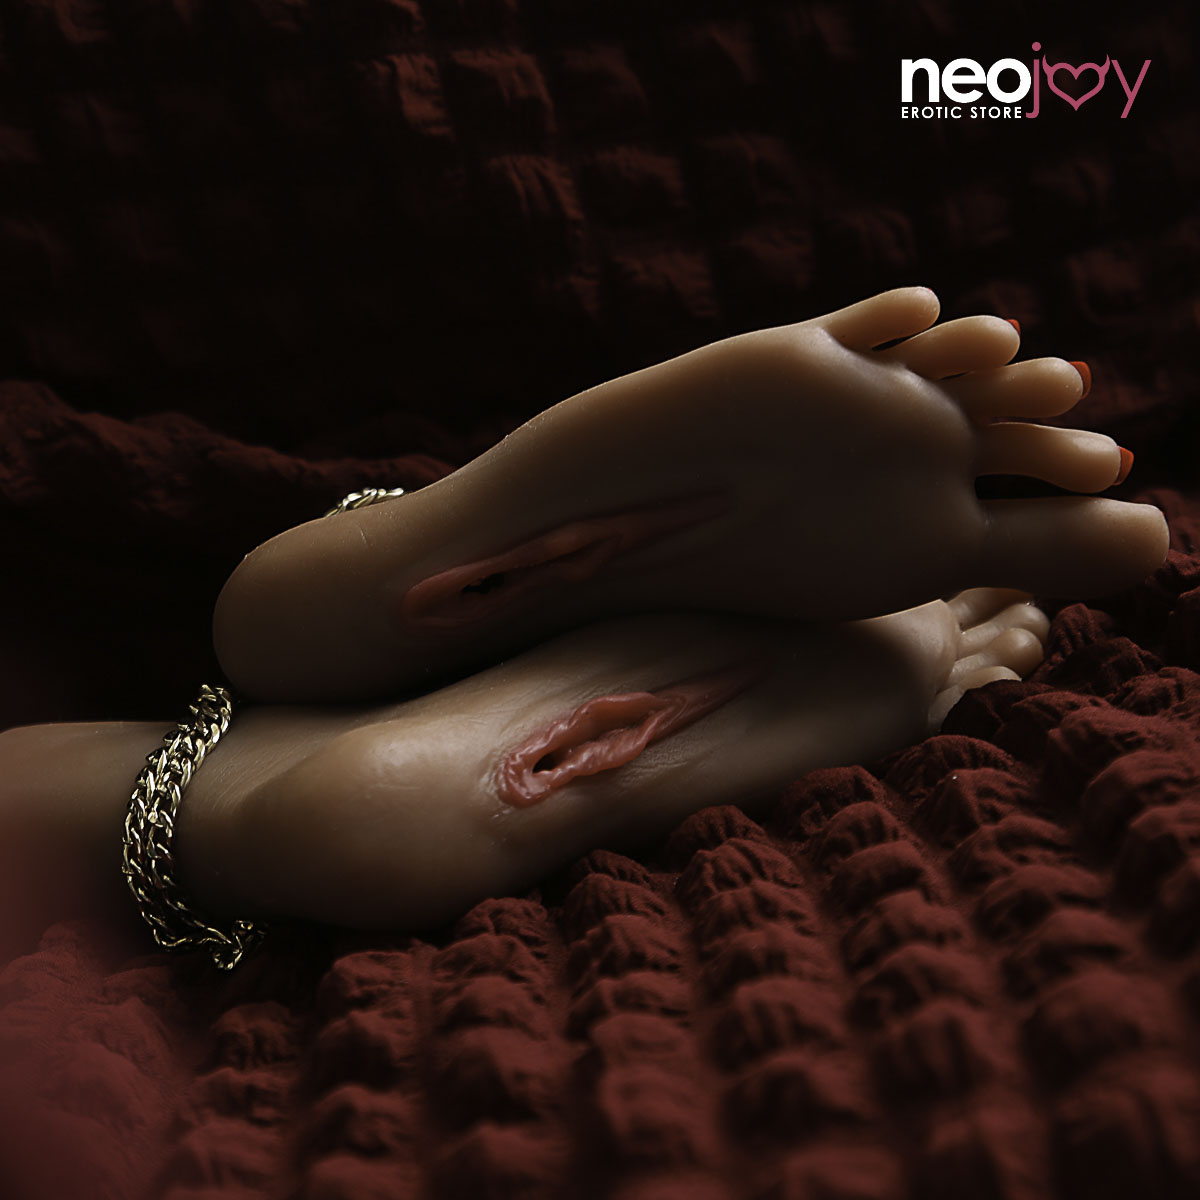 Neojoy Emma Right Foot Fetish - Internal Skeleton & Toenails - 0.55 kg - Brown - With Vagina